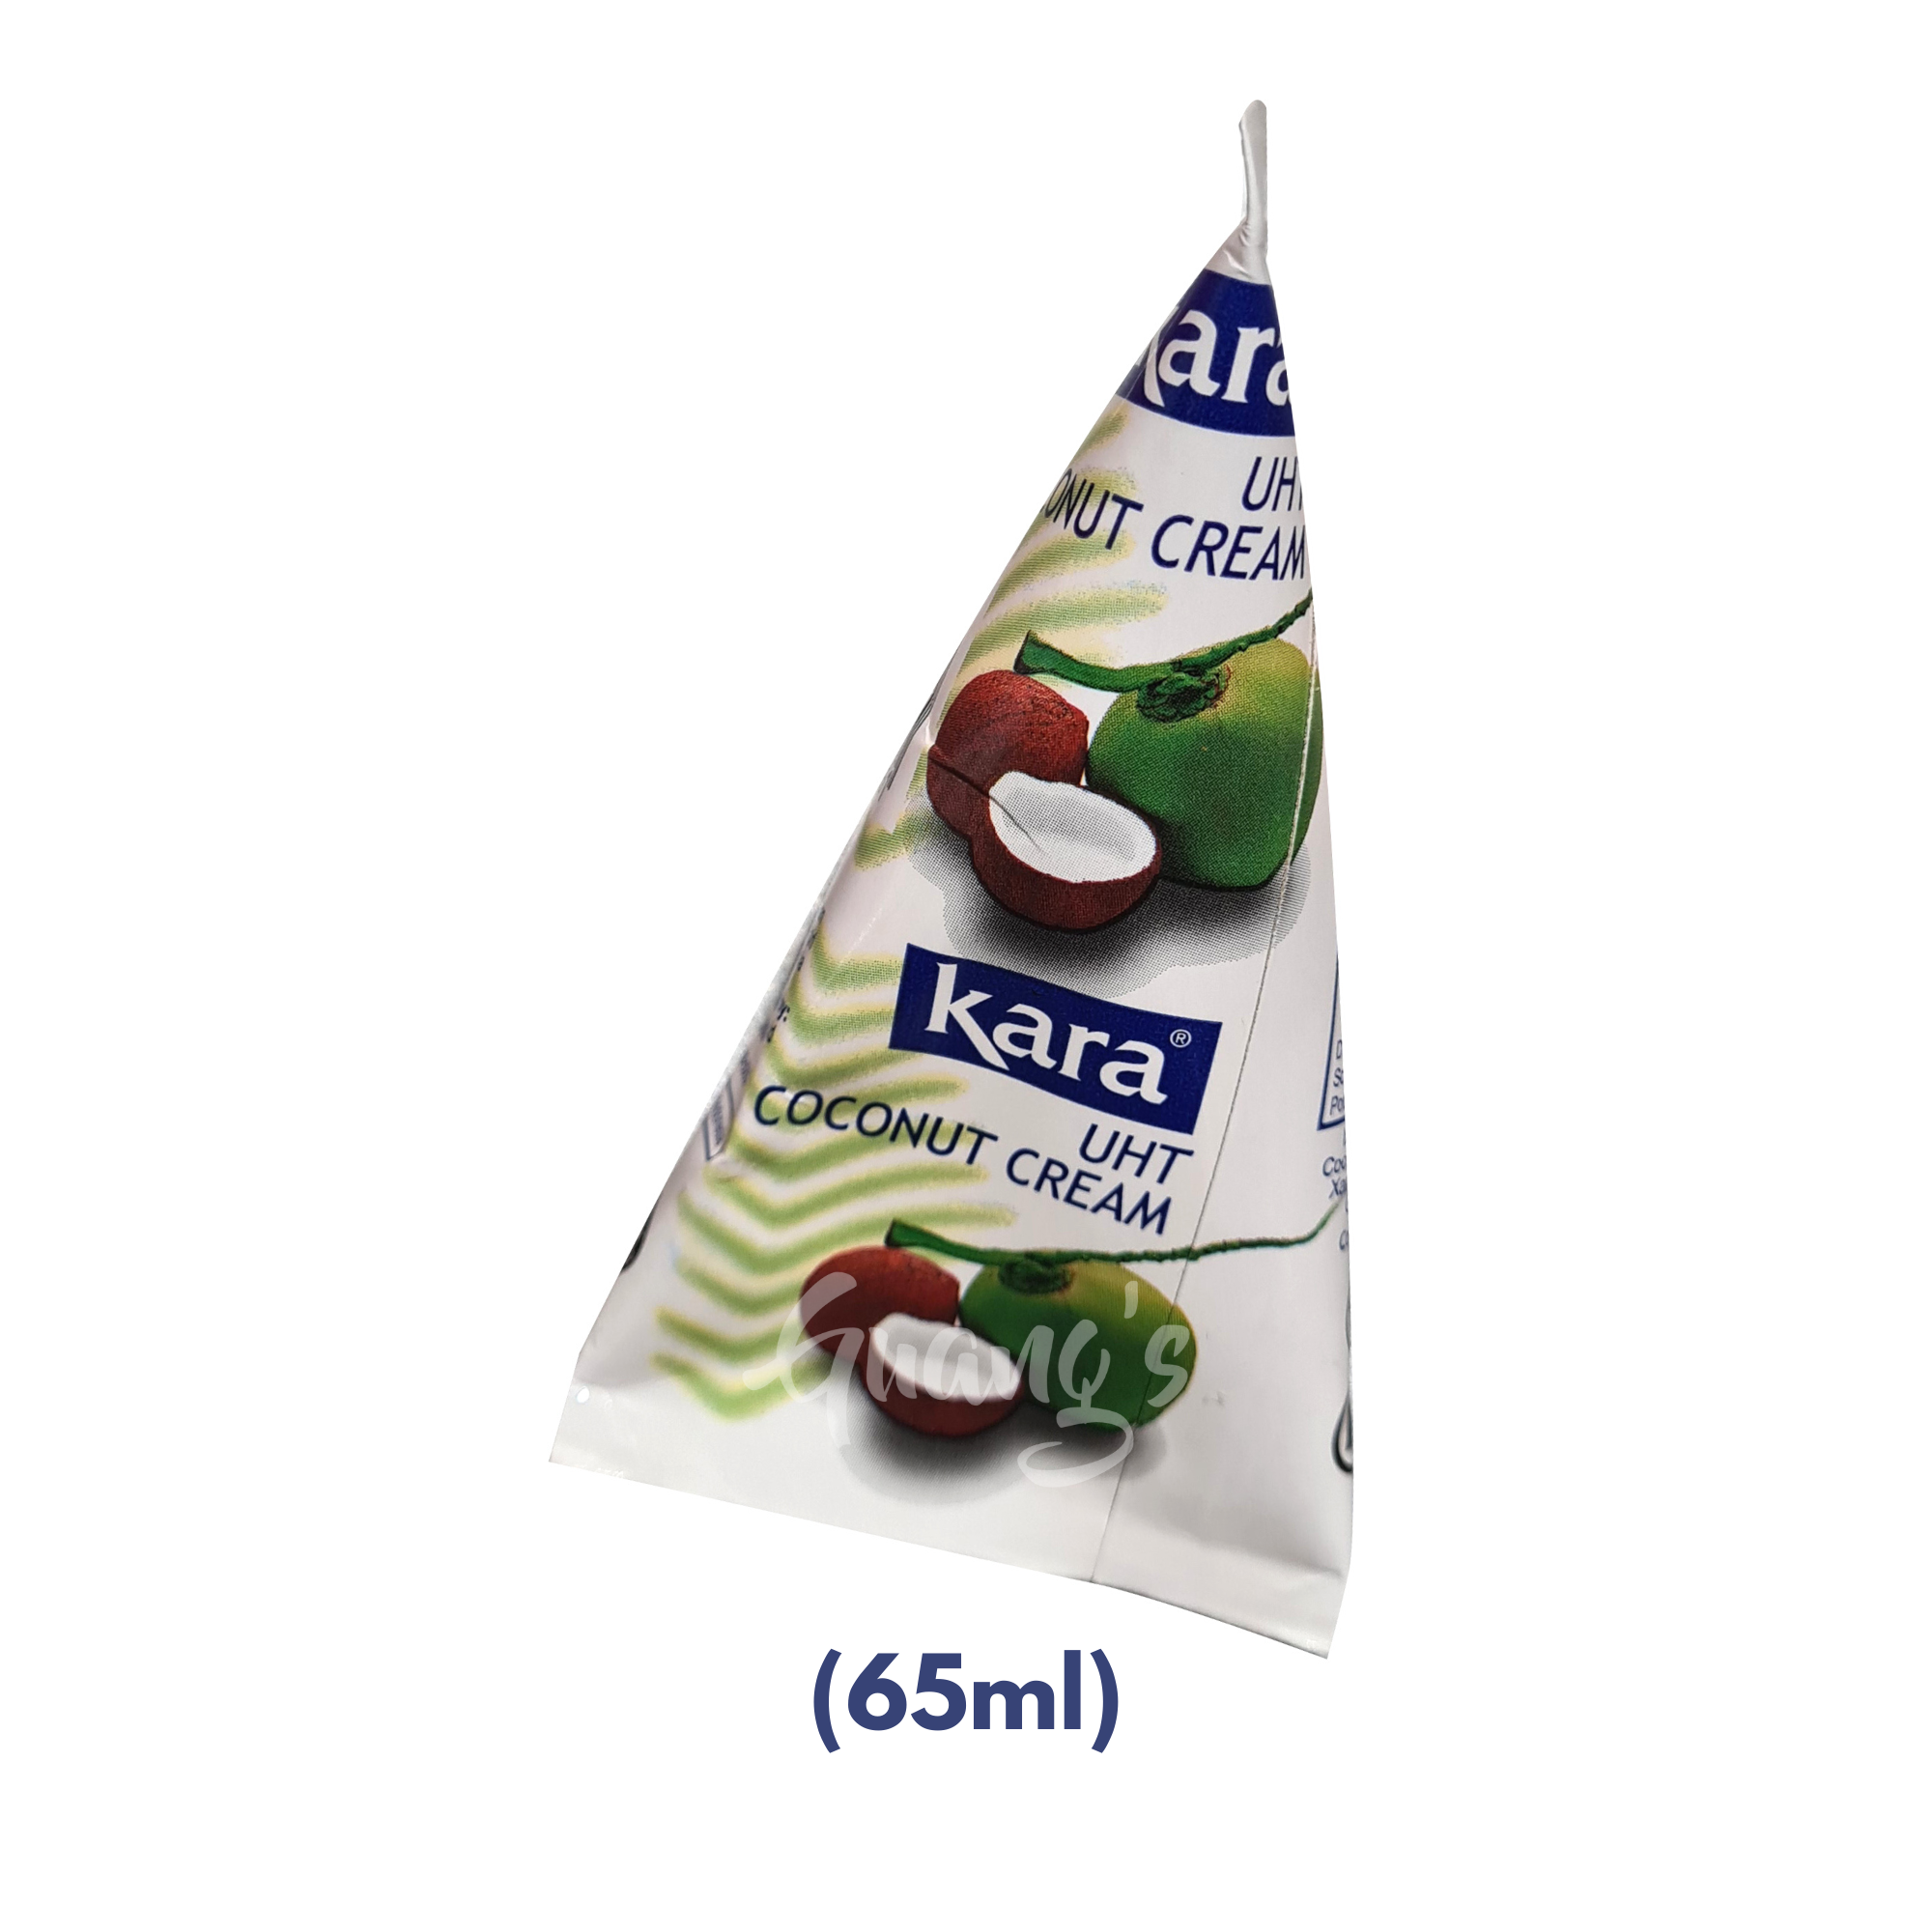 Kara Coconut Cream (65ml)